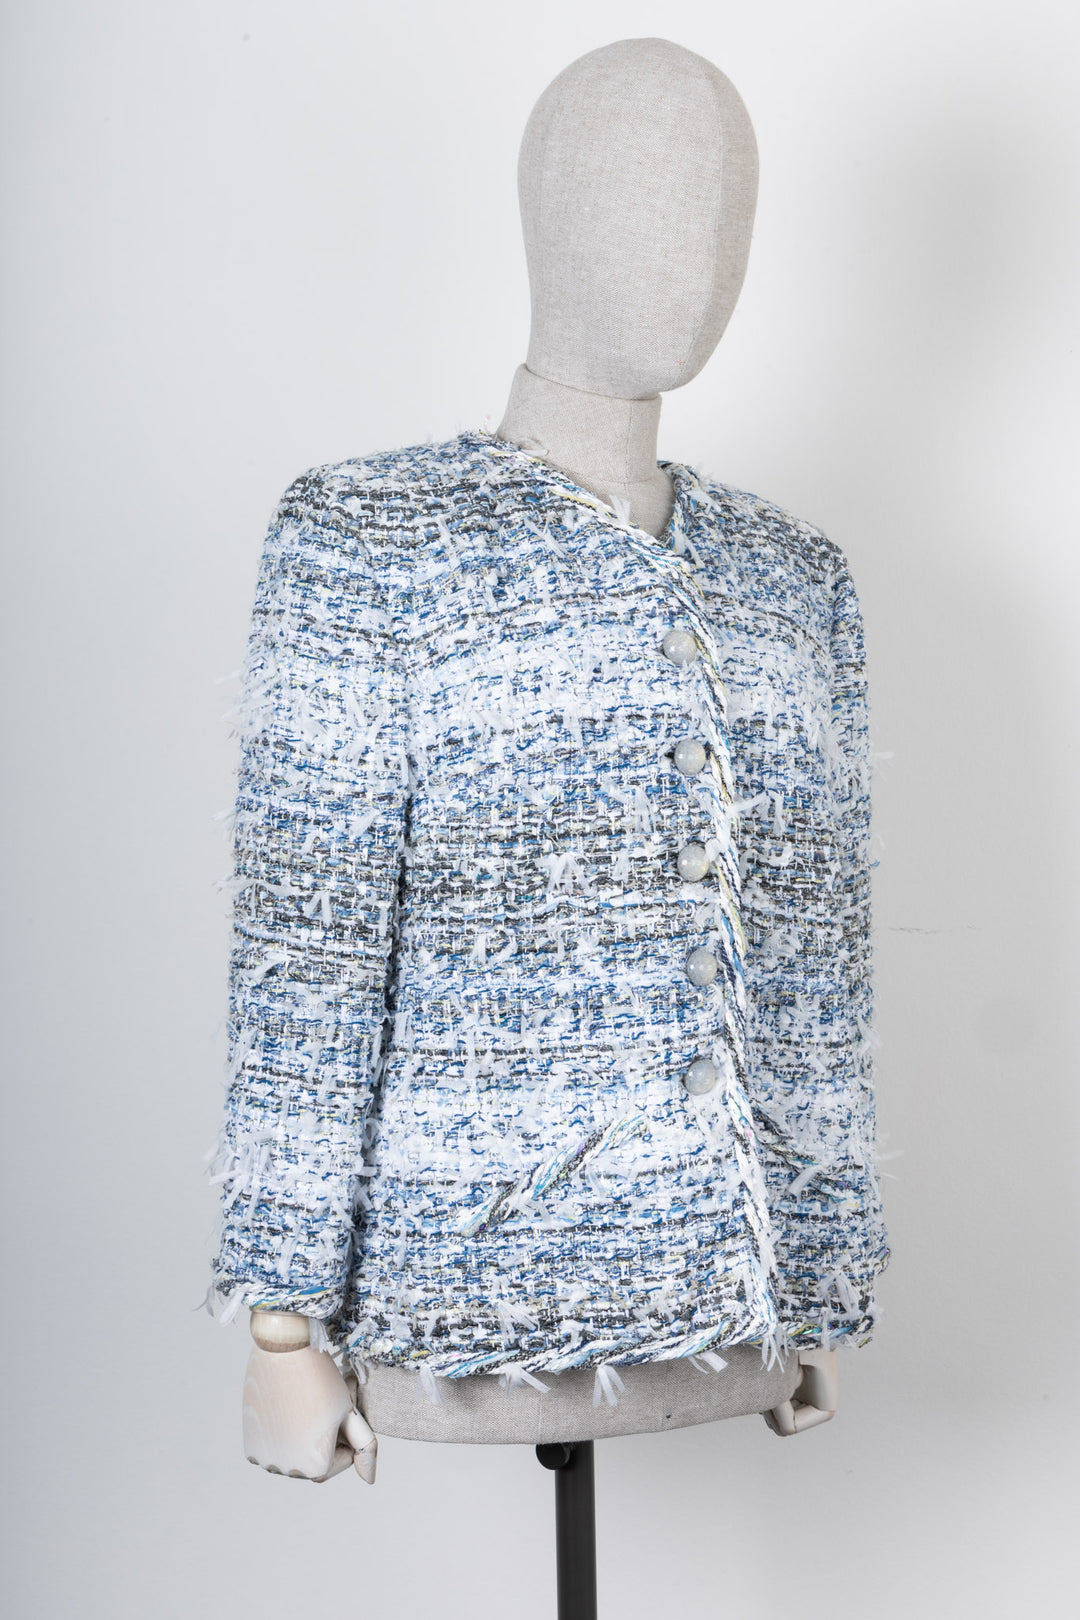 CHANEL Tweed Jacket White Blue S2018